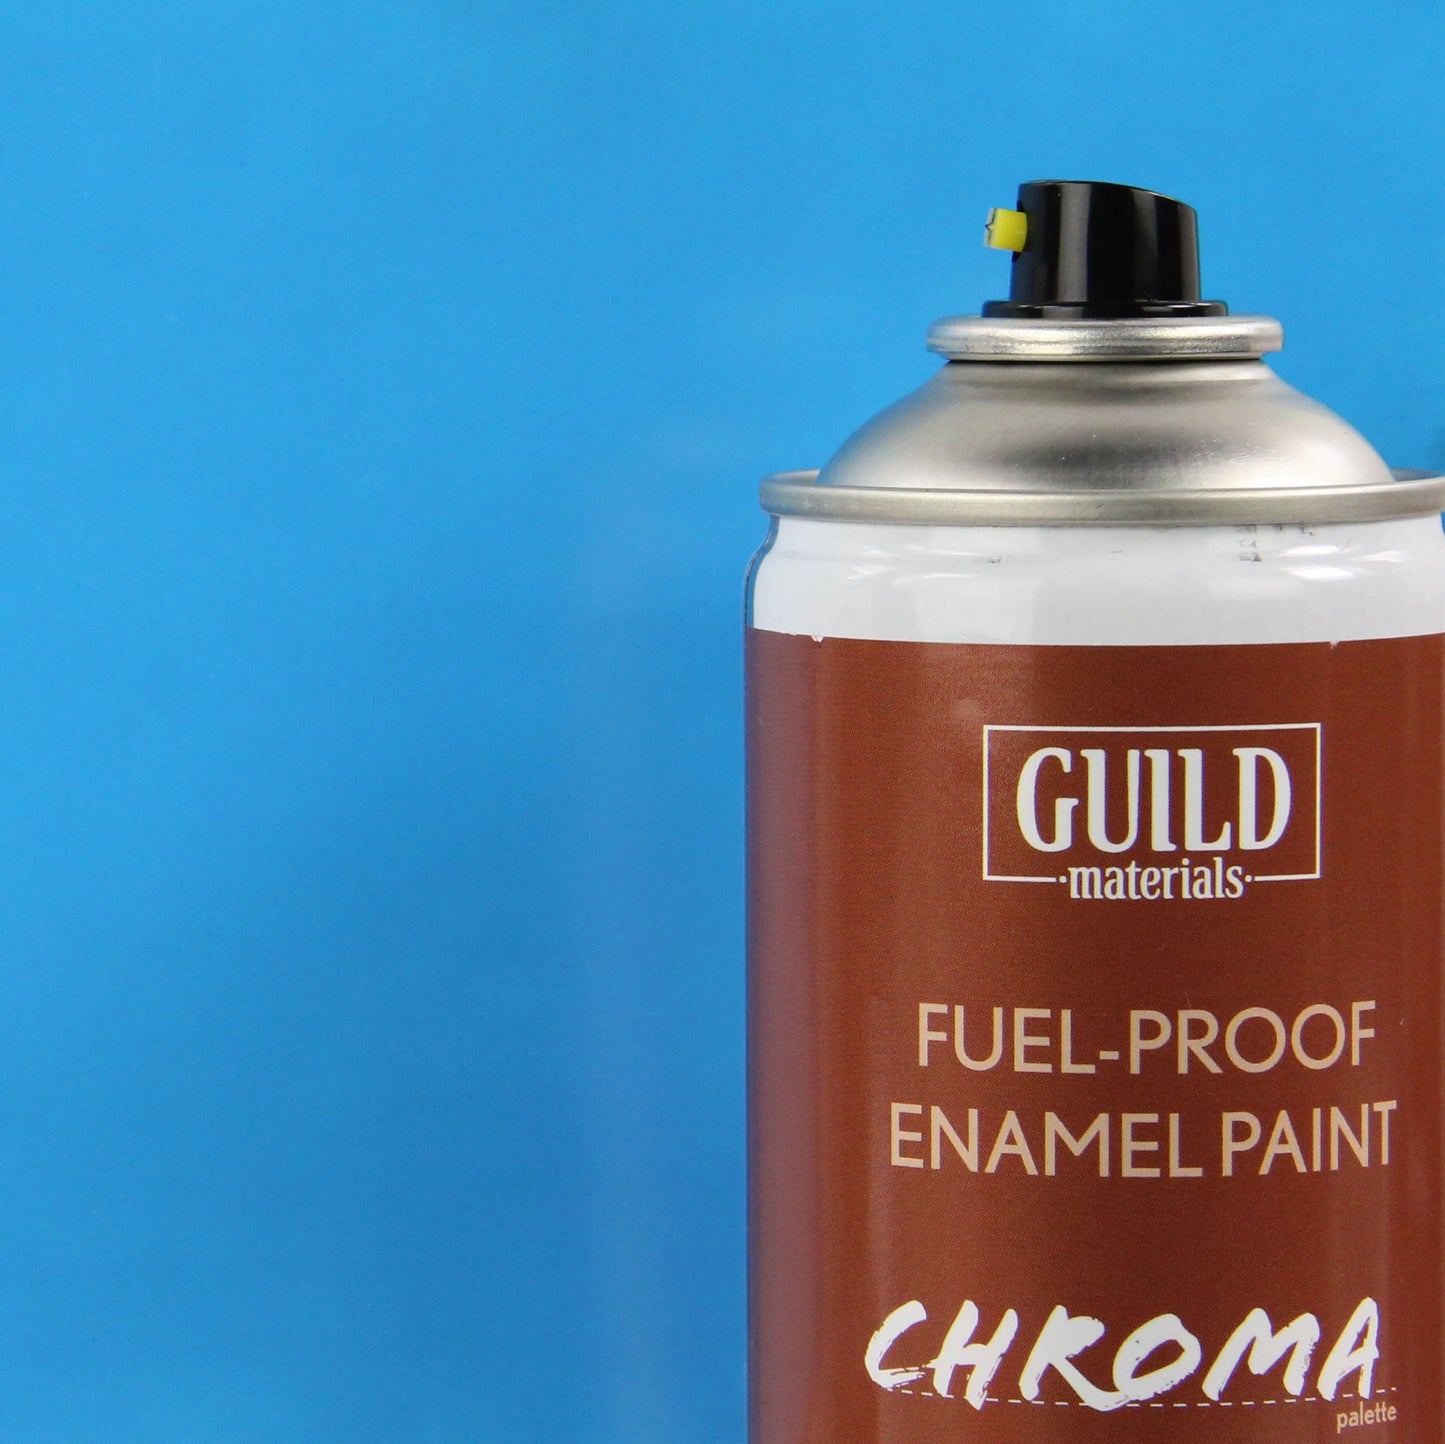 Chroma Enamel Fuelproof Paint Gloss Light Blue (400ml Aerosol)